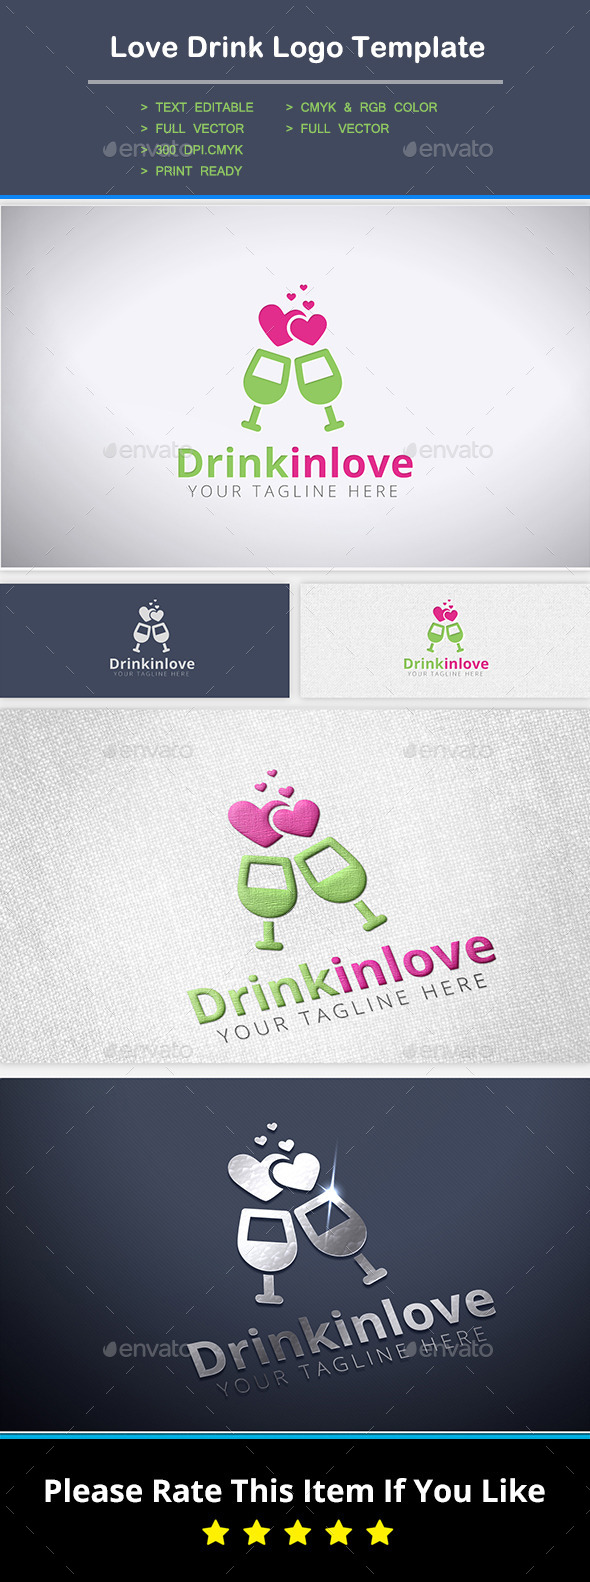 Love Drink Logo Template